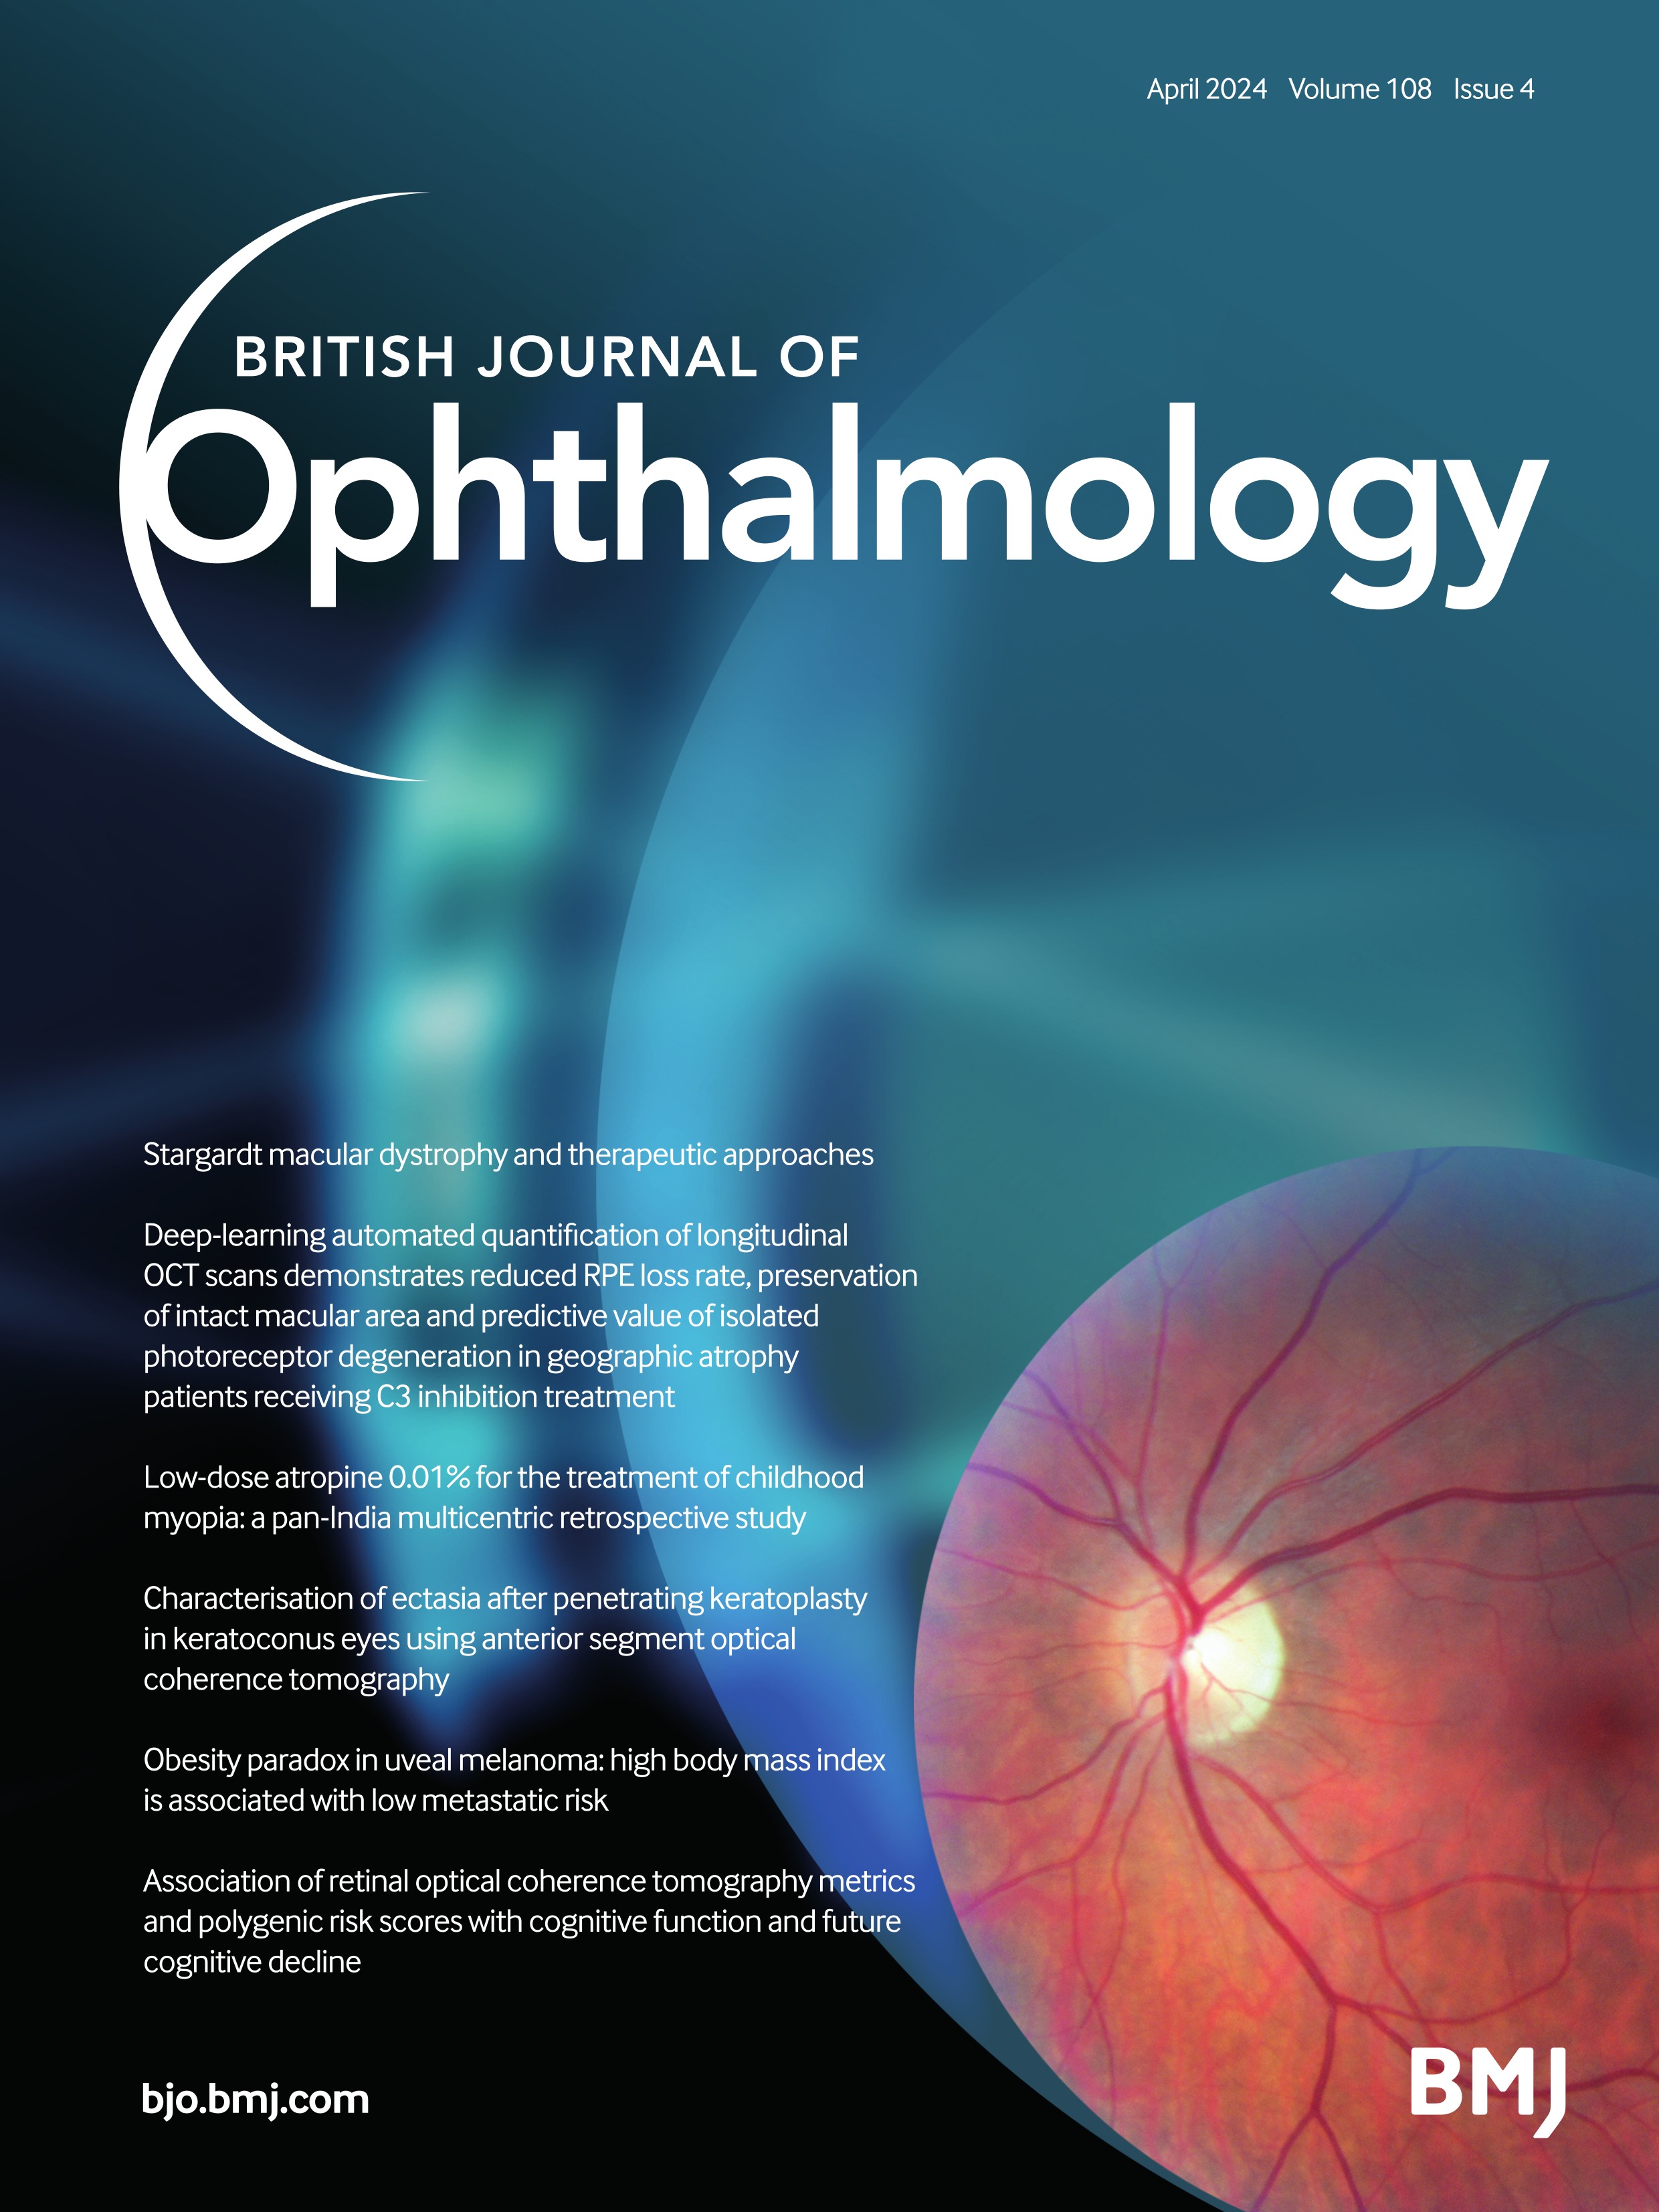 Deep phenotyping of PROM1-associated retinal degeneration